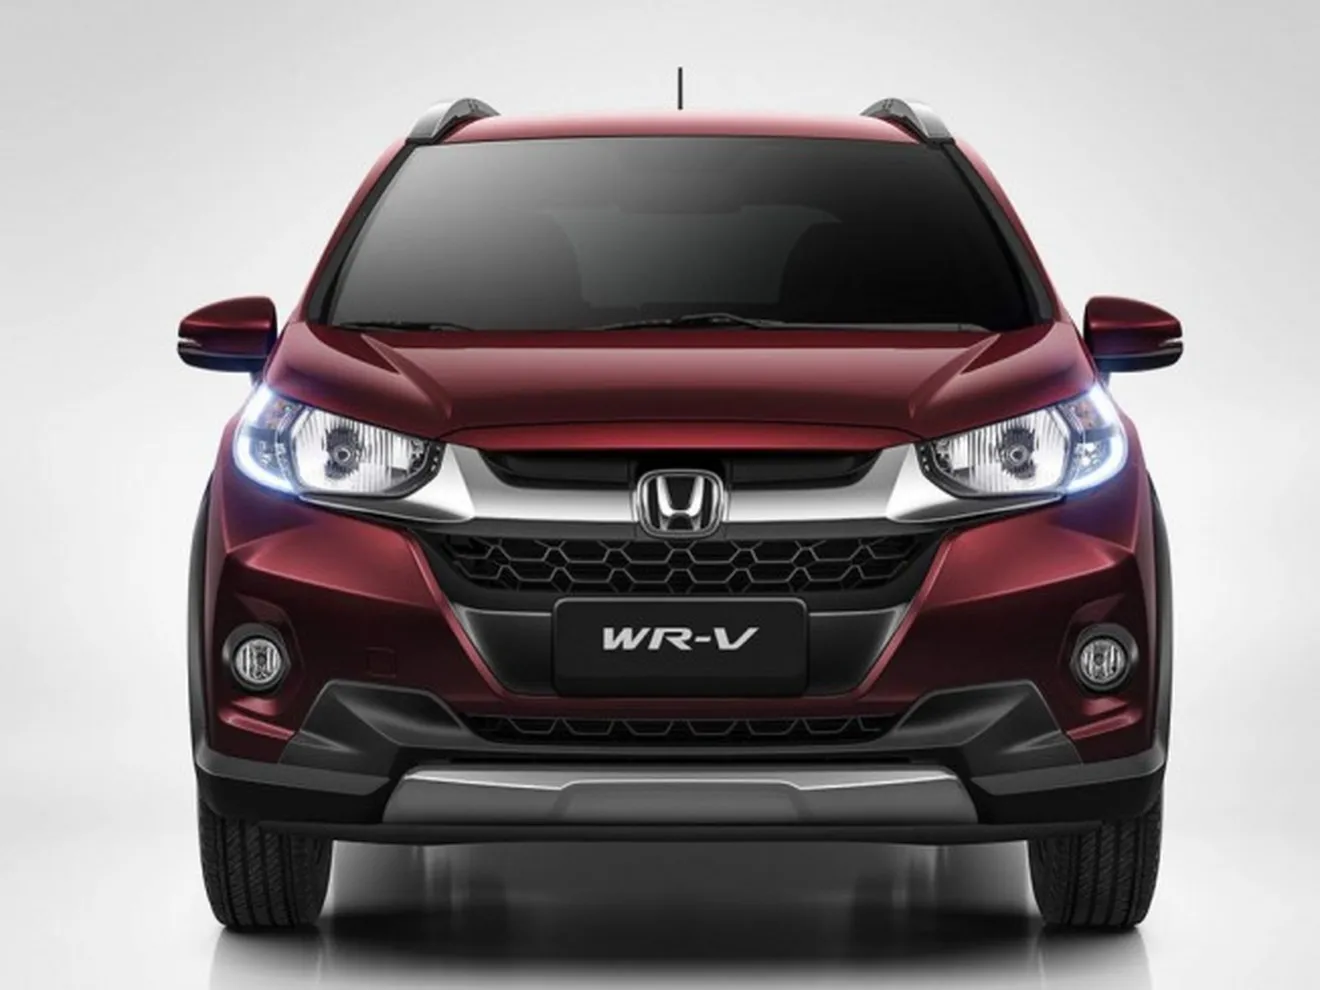 Honda WR-V - frontal